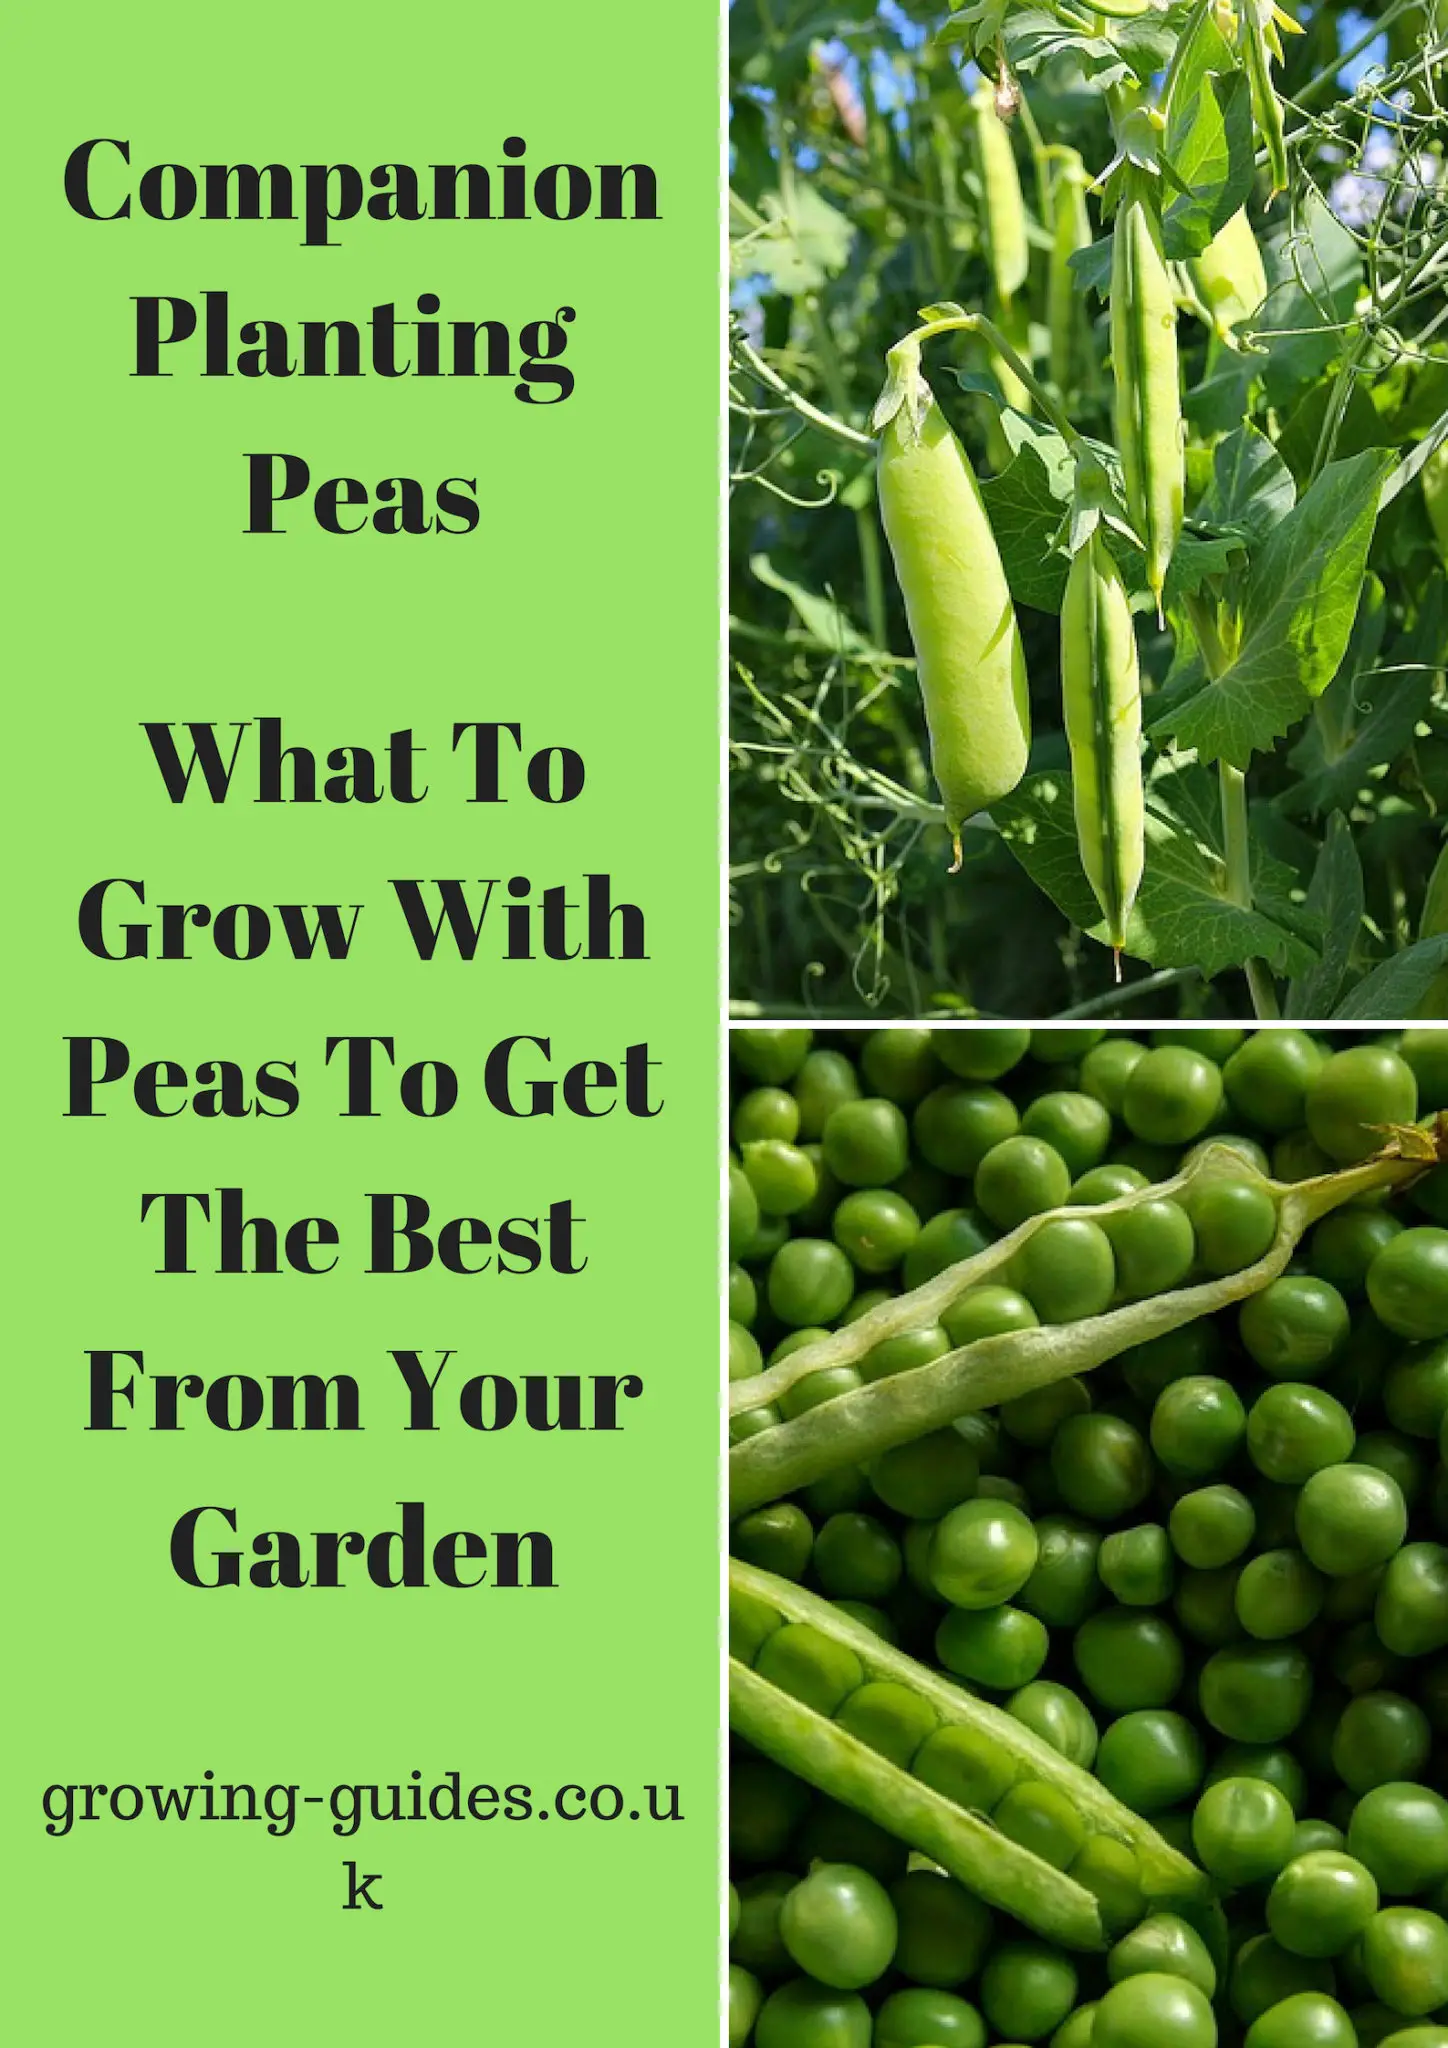 Image of Peas companion planting